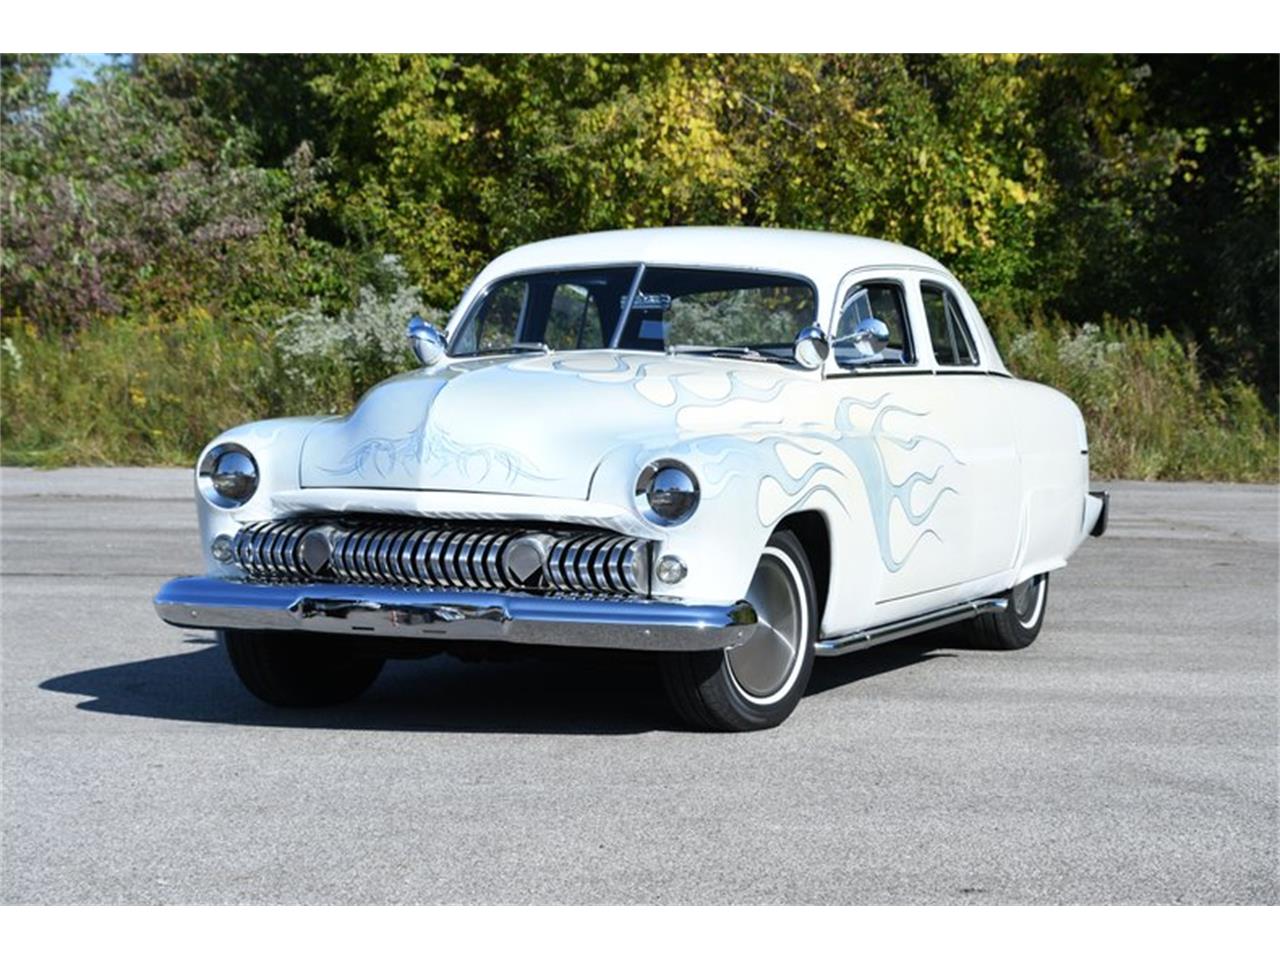 For Sale: 1951 Mercury Sedan in Elyria, Ohio for sale in Elyria, OH